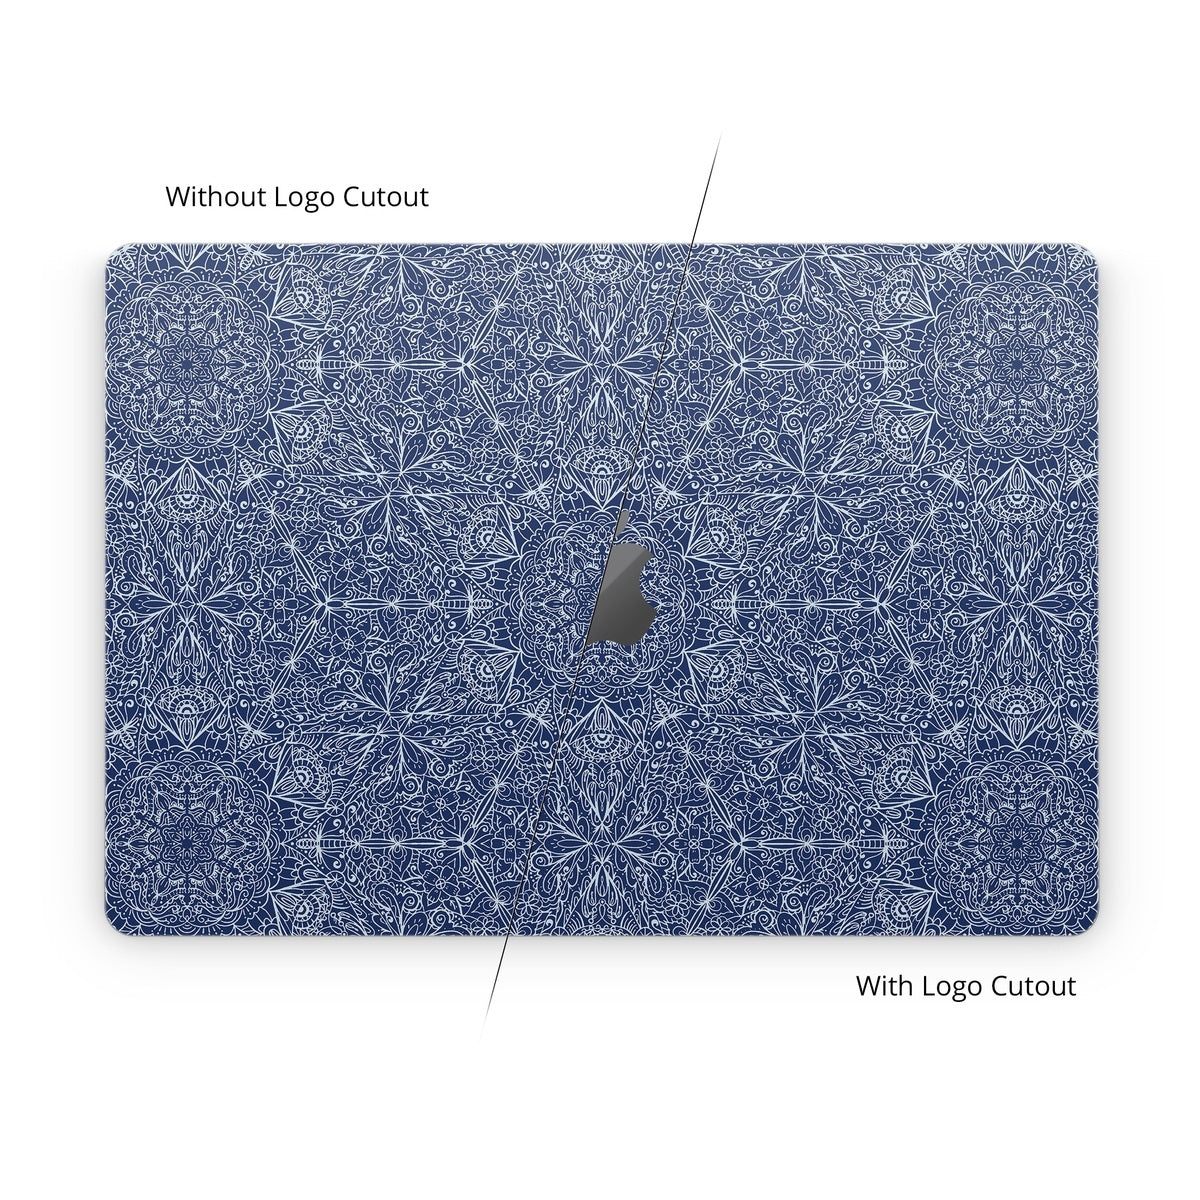 Celestial Bohemian - Apple MacBook Skin